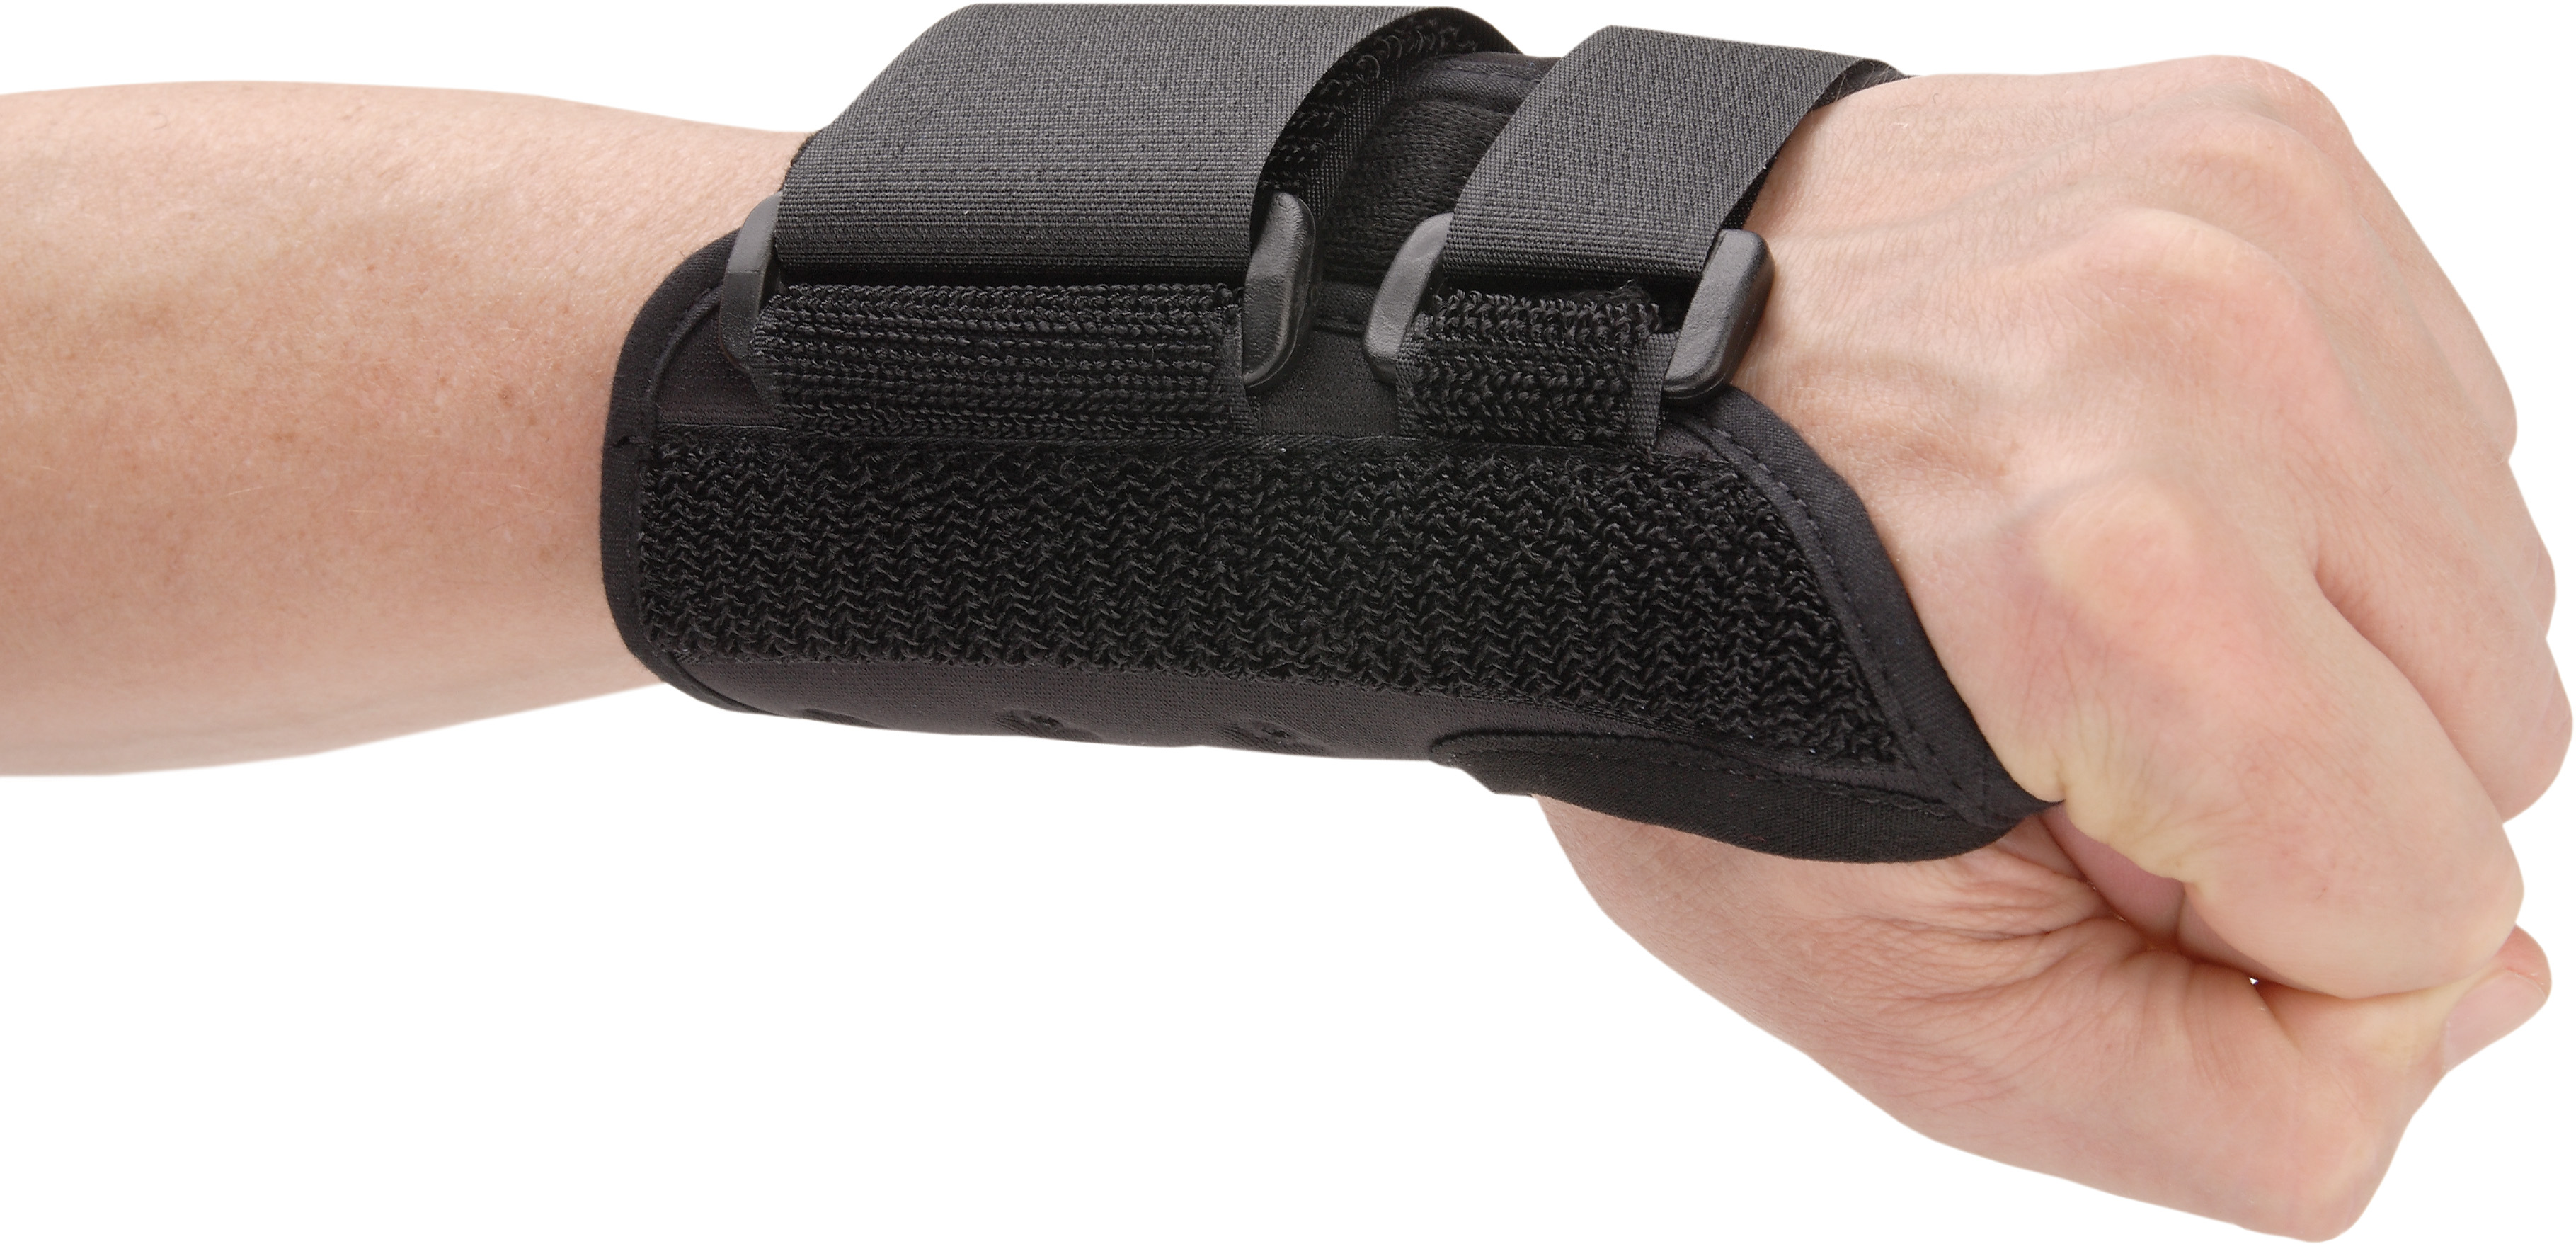 form-fit-wrist-brace-6-left-md-417085-ossur-os378558-2.jpg